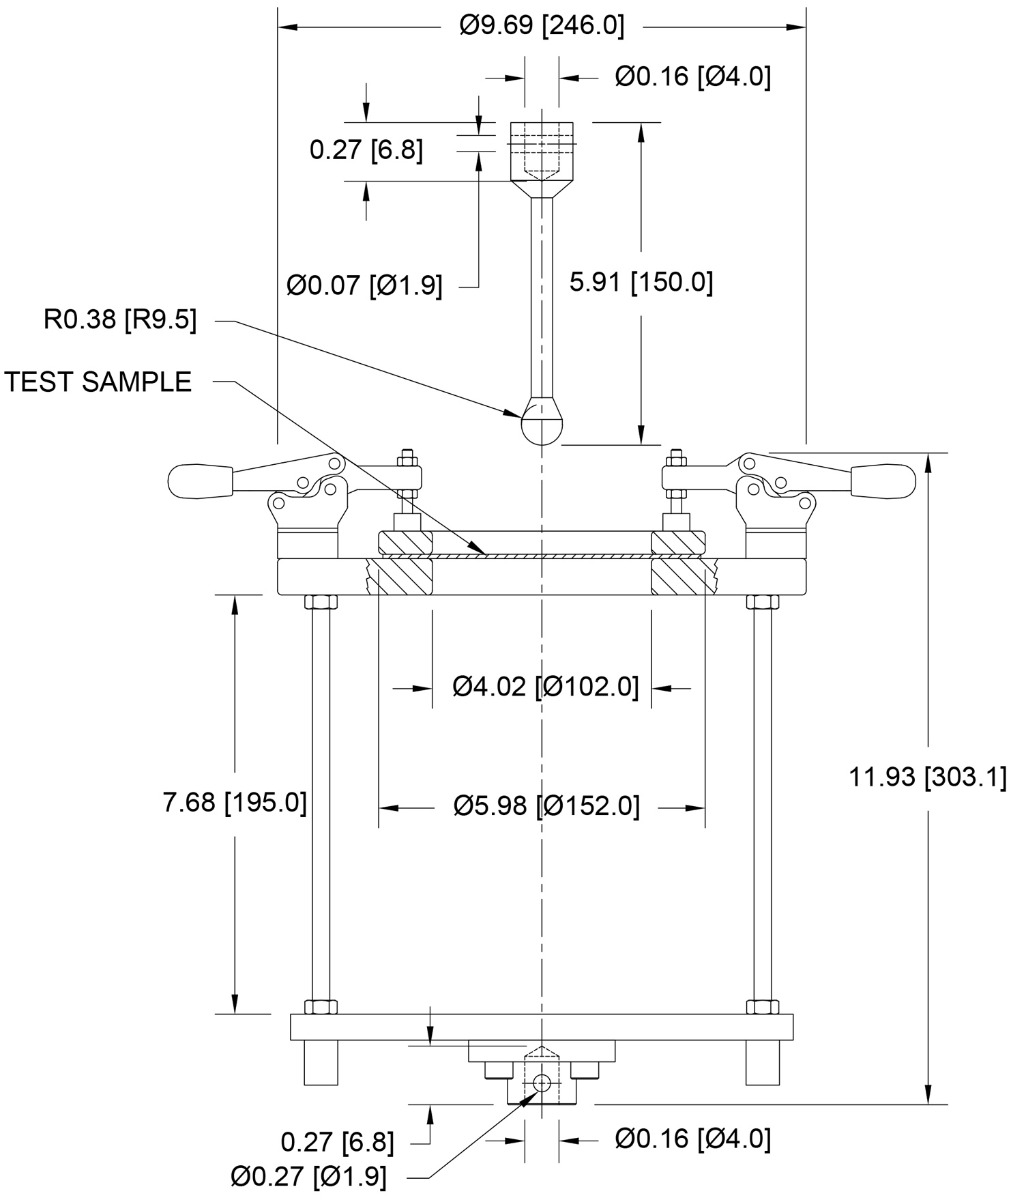 Mark-10 G1110 Puncture Fixture dimensions.